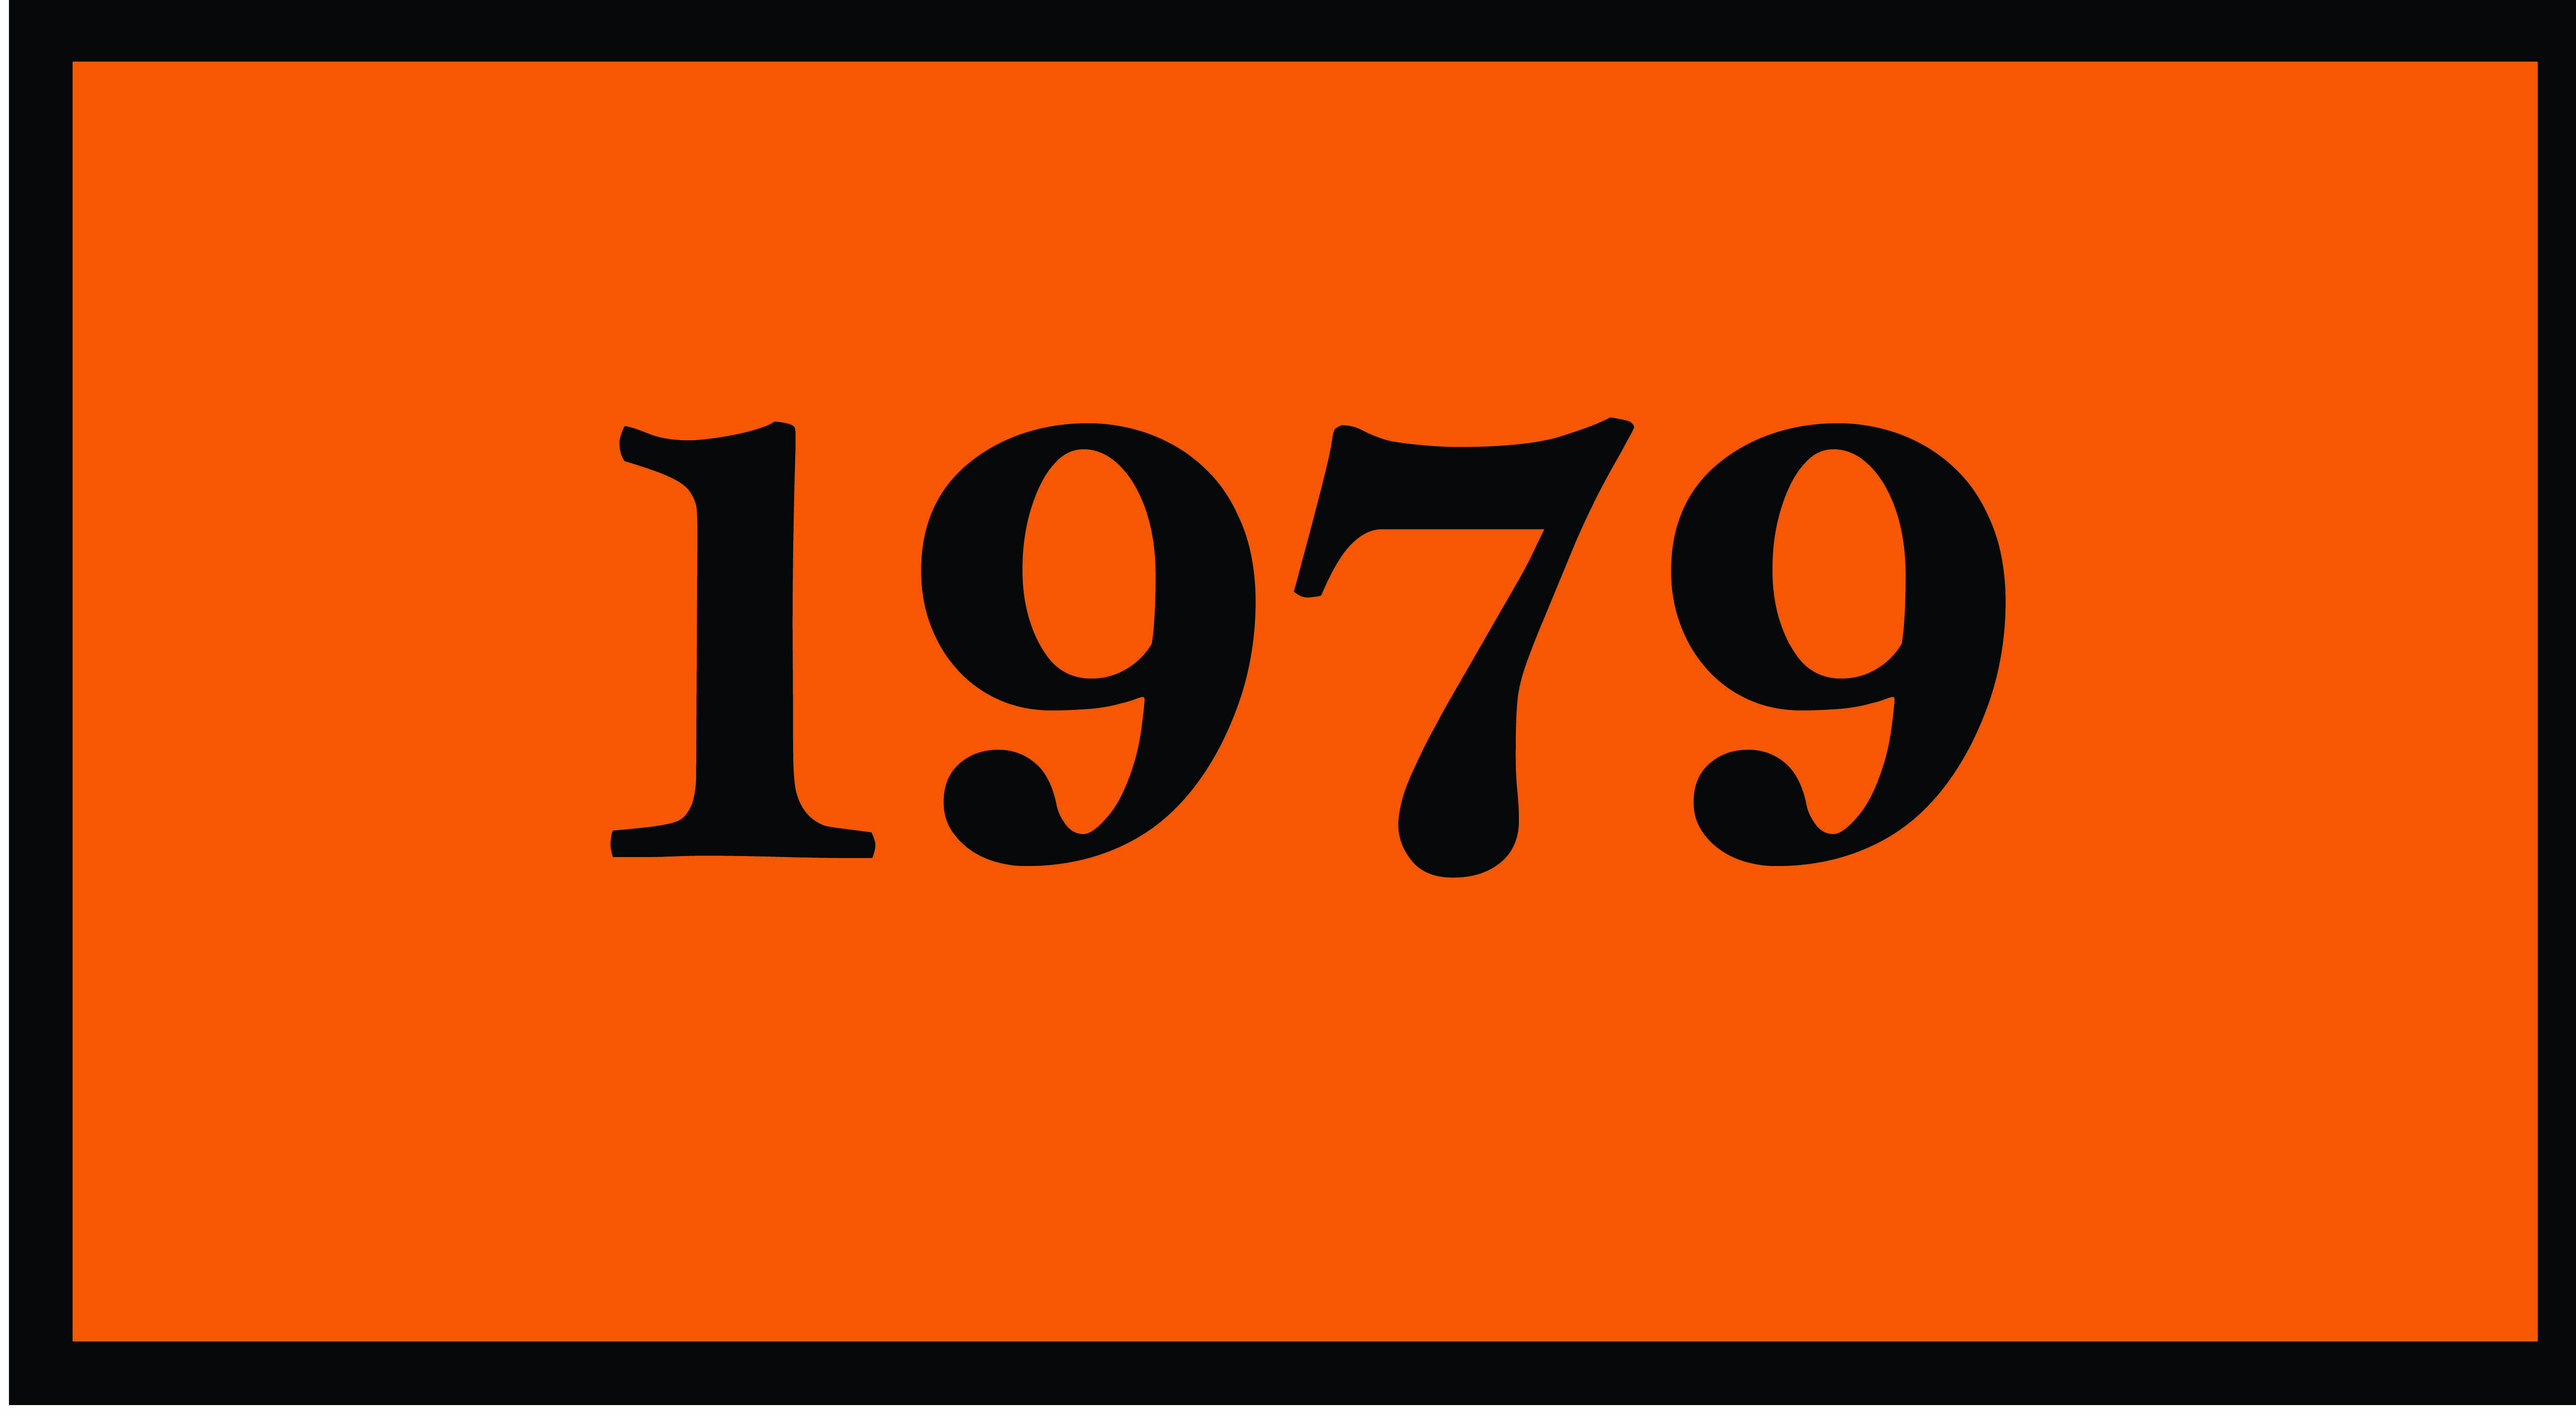 HP_020_1979 - Orange